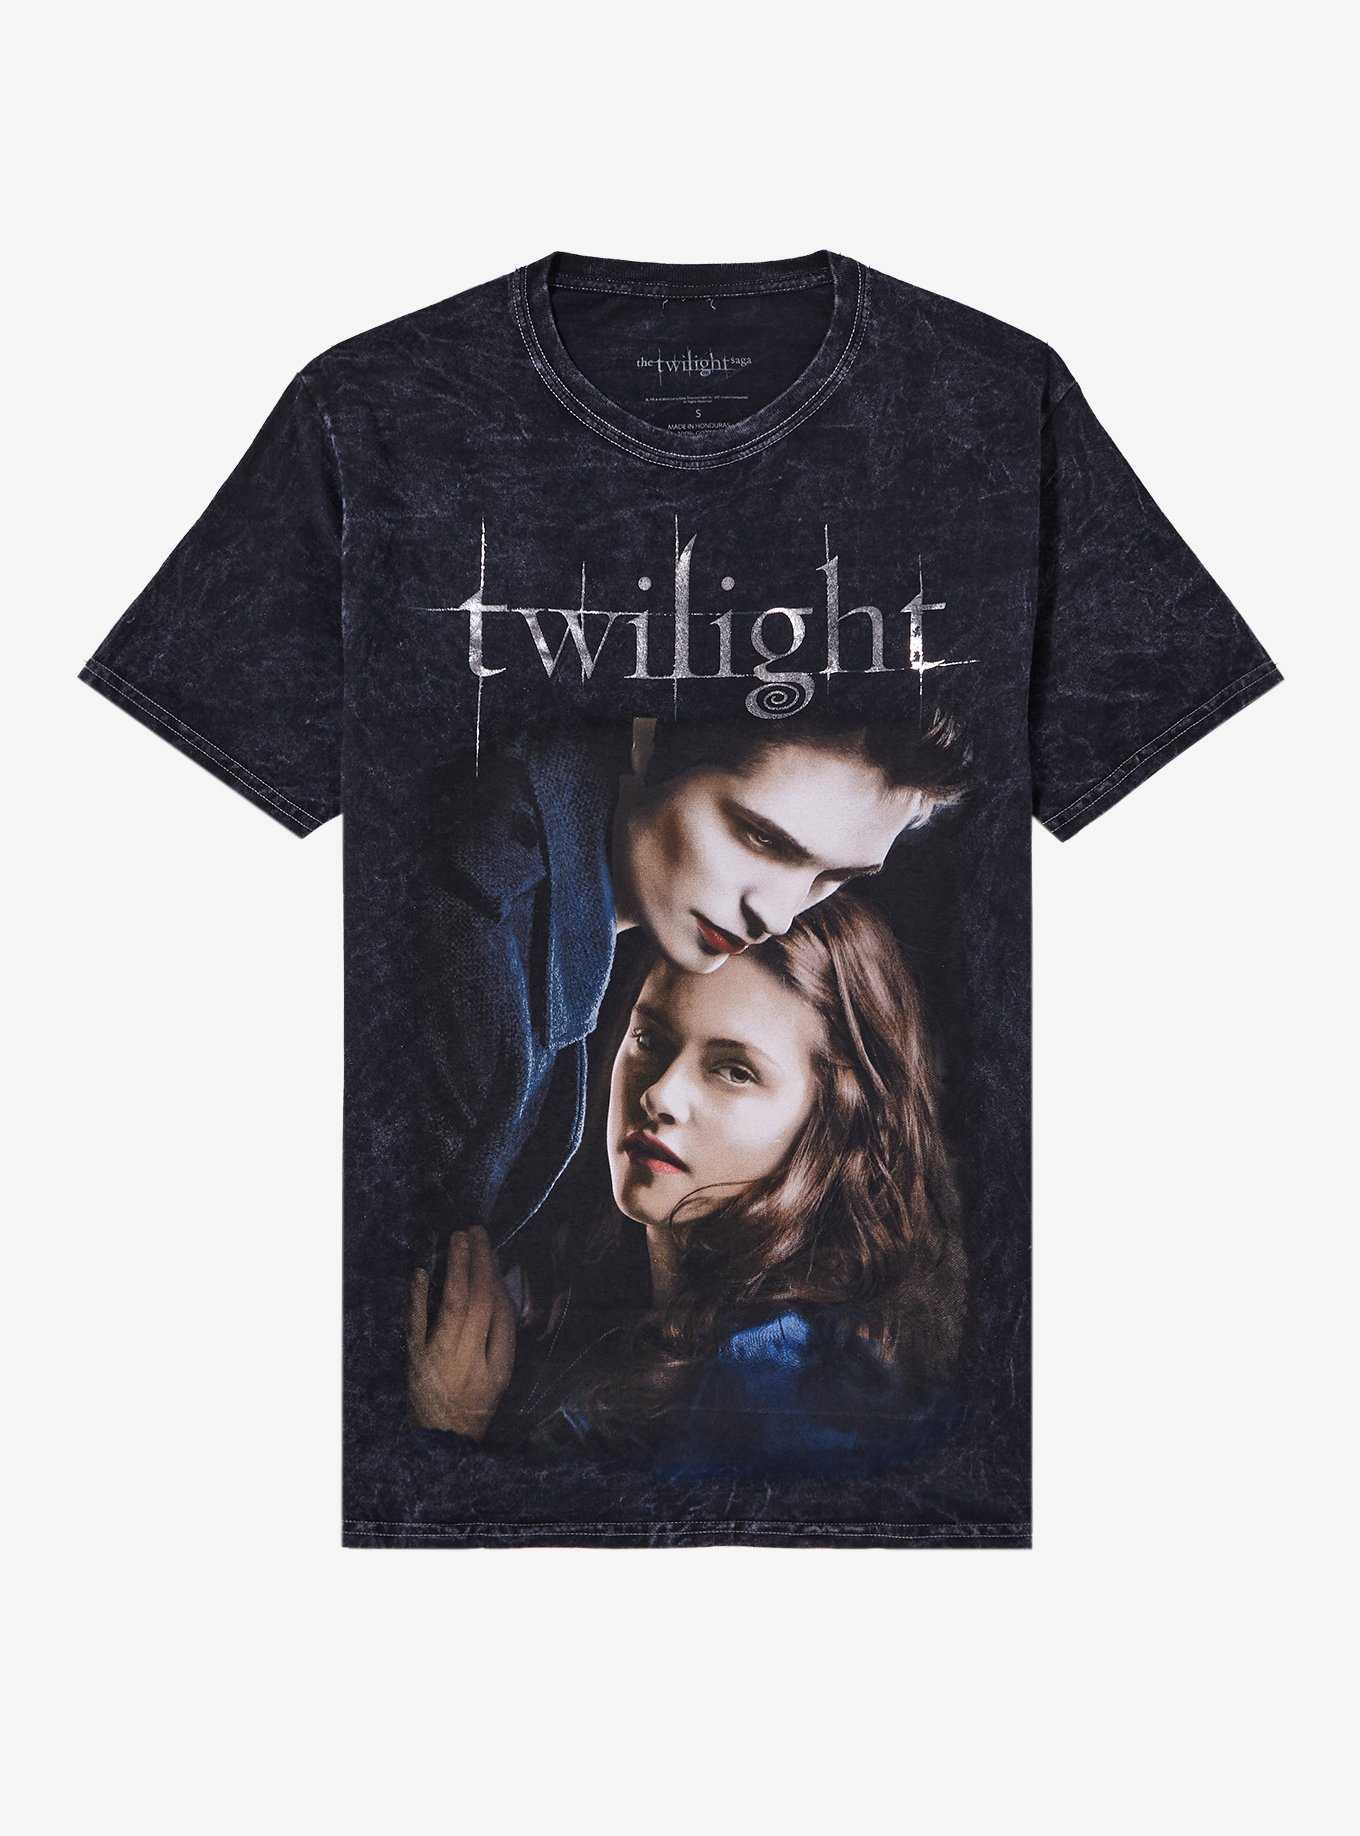  Twilight T Shirt Team Edward Cullen Unisex Adult Short Sleeve T  Shirts Vampire Romance Movie Graphic Tees Black : Clothing, Shoes & Jewelry